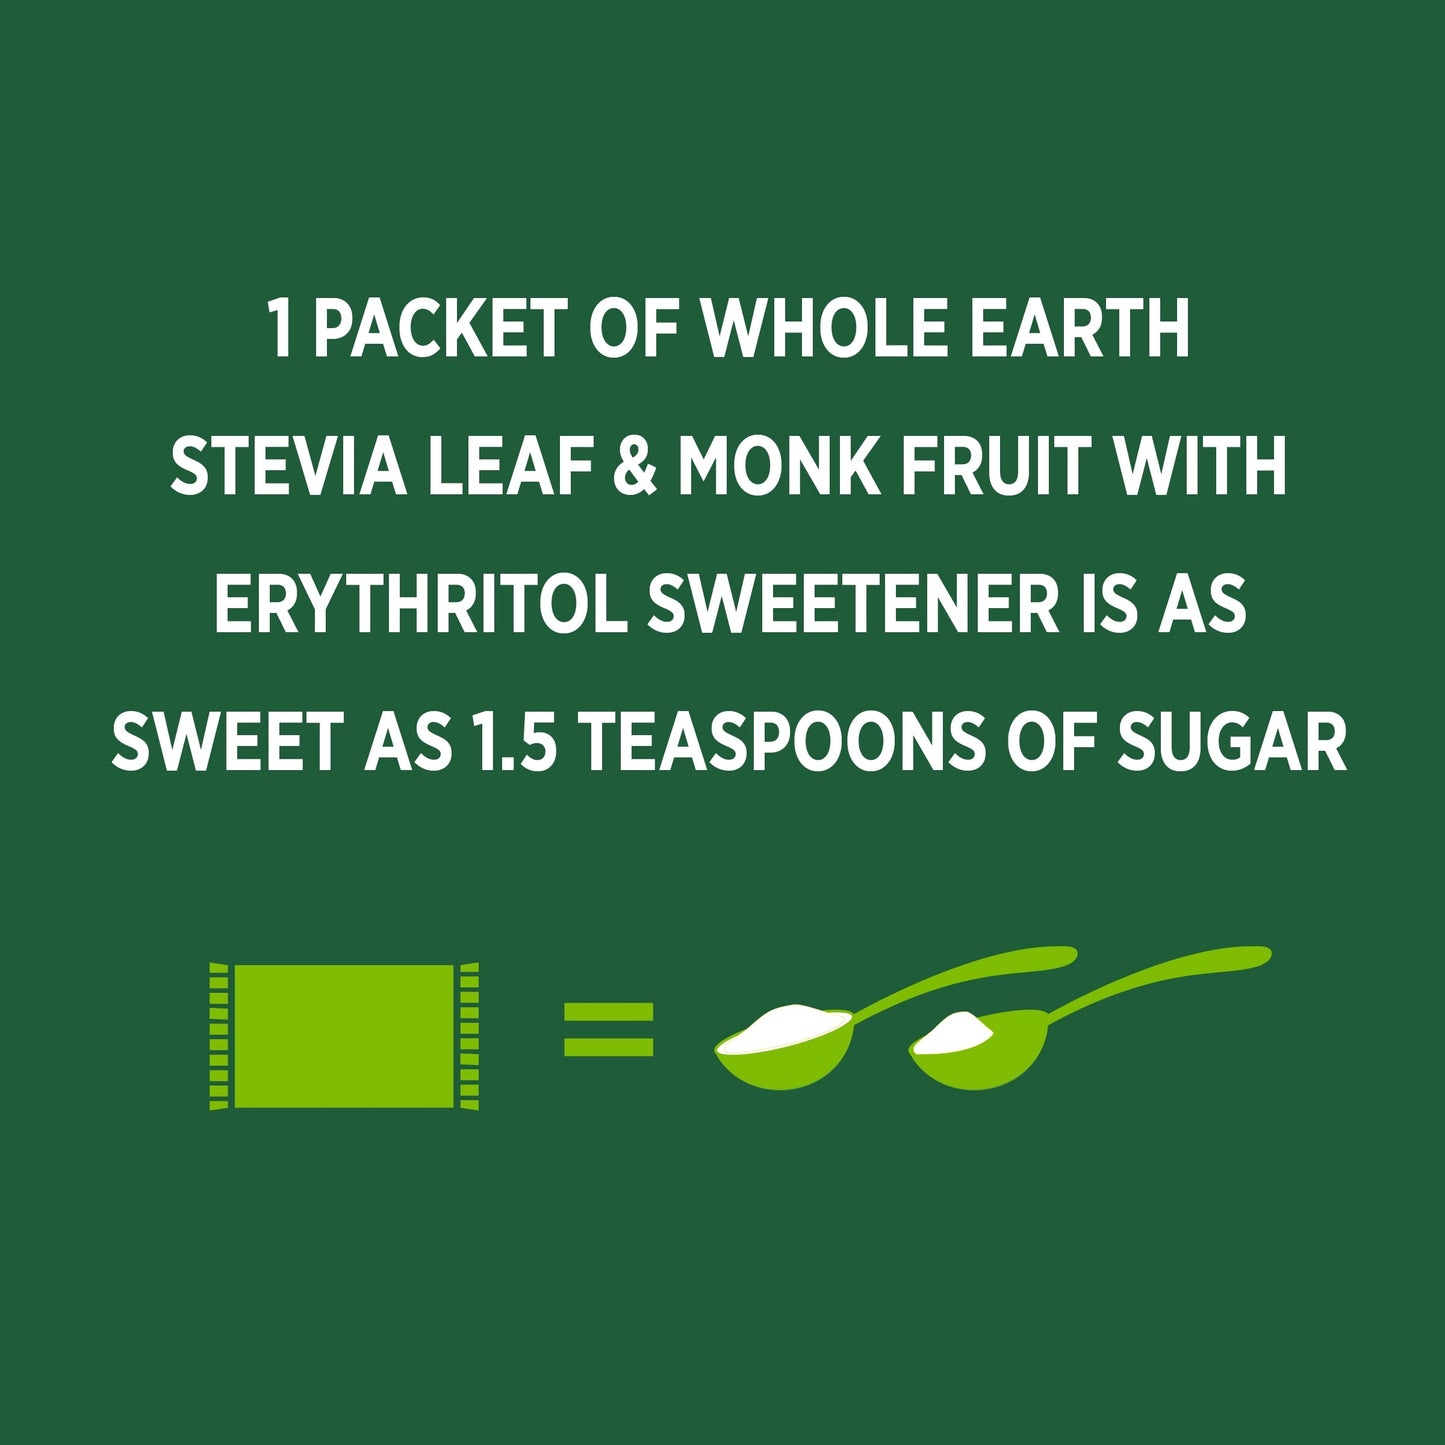 Whole Earth Stevia Leaf & Monk Fruit Plant-Based Sweetener, 80 Count, 5.6 oz